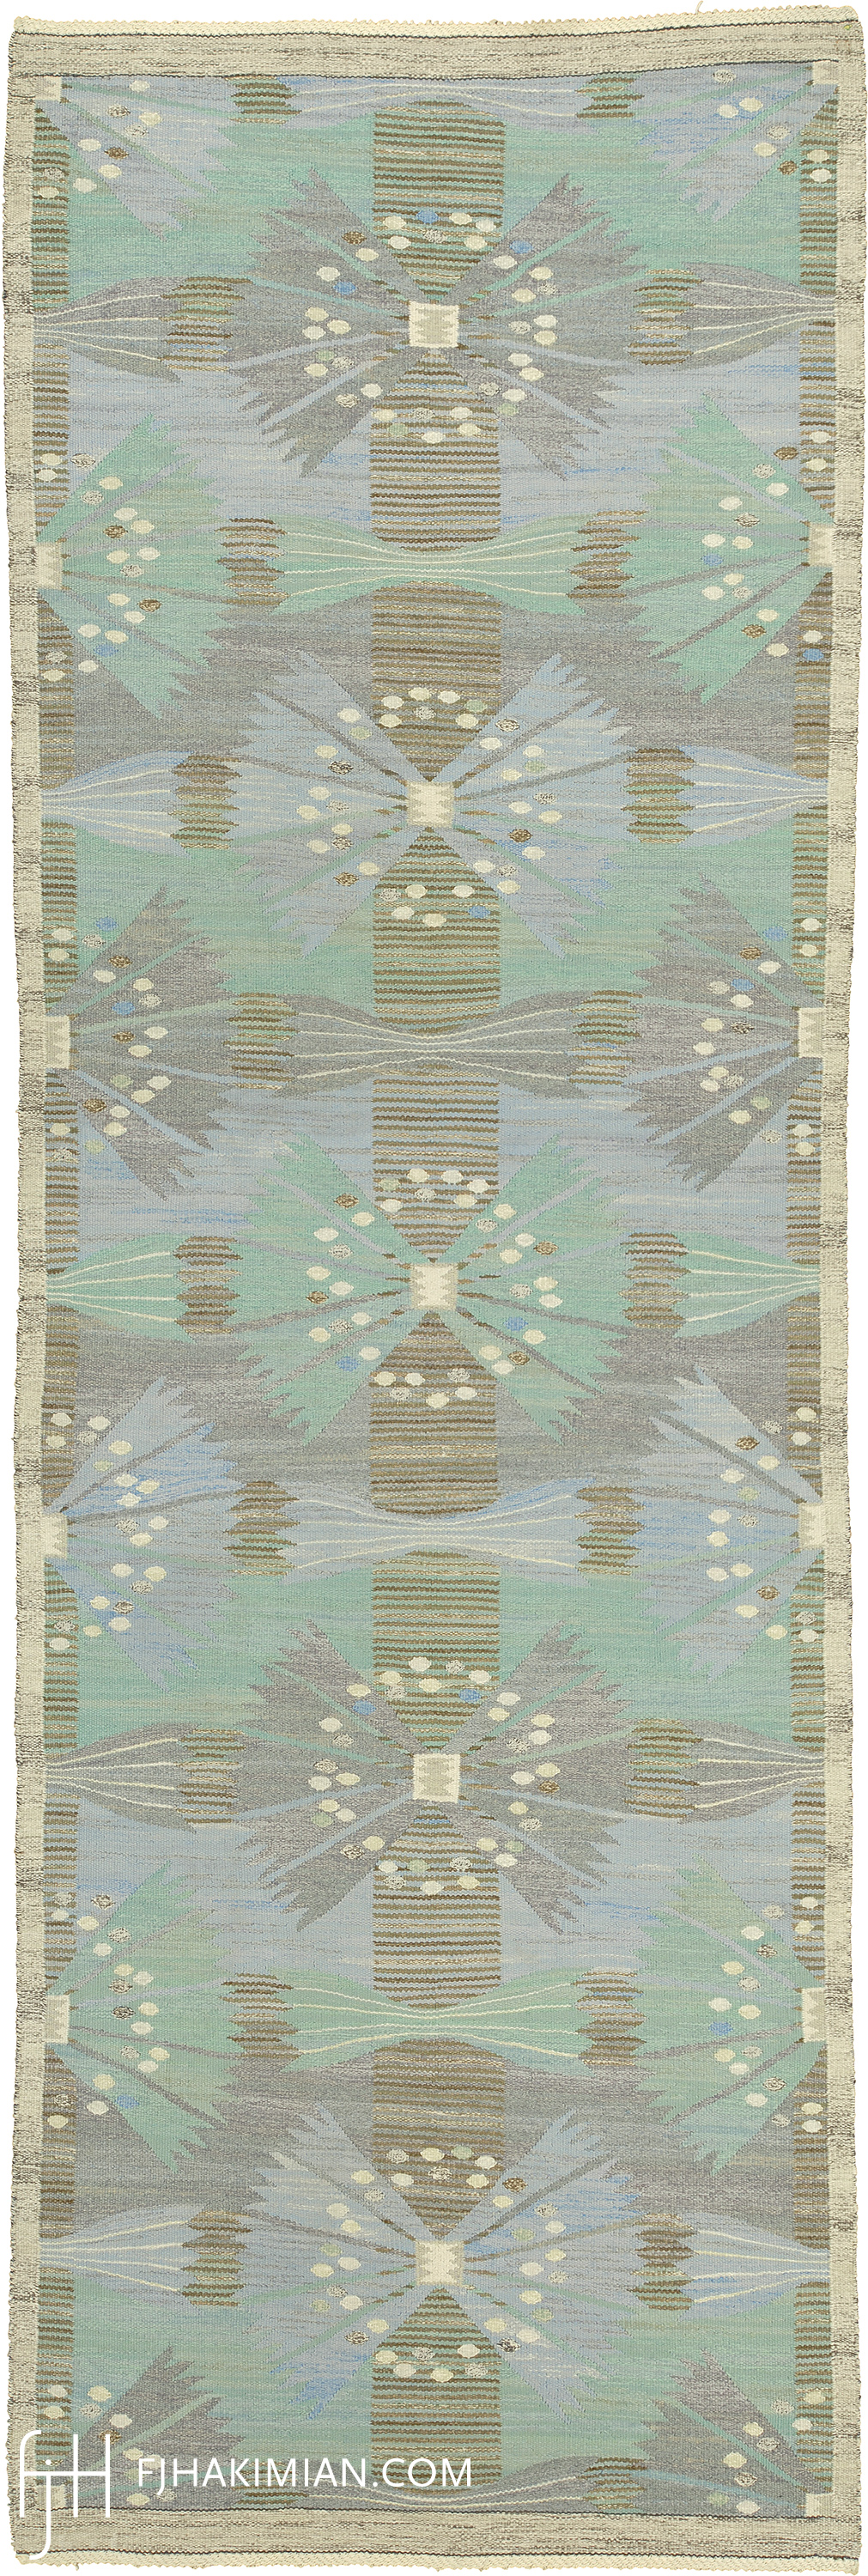 Sandy Design | Custom Swedish Inspired Carpet | FJ Hakimian | Carpet Gallery in NY